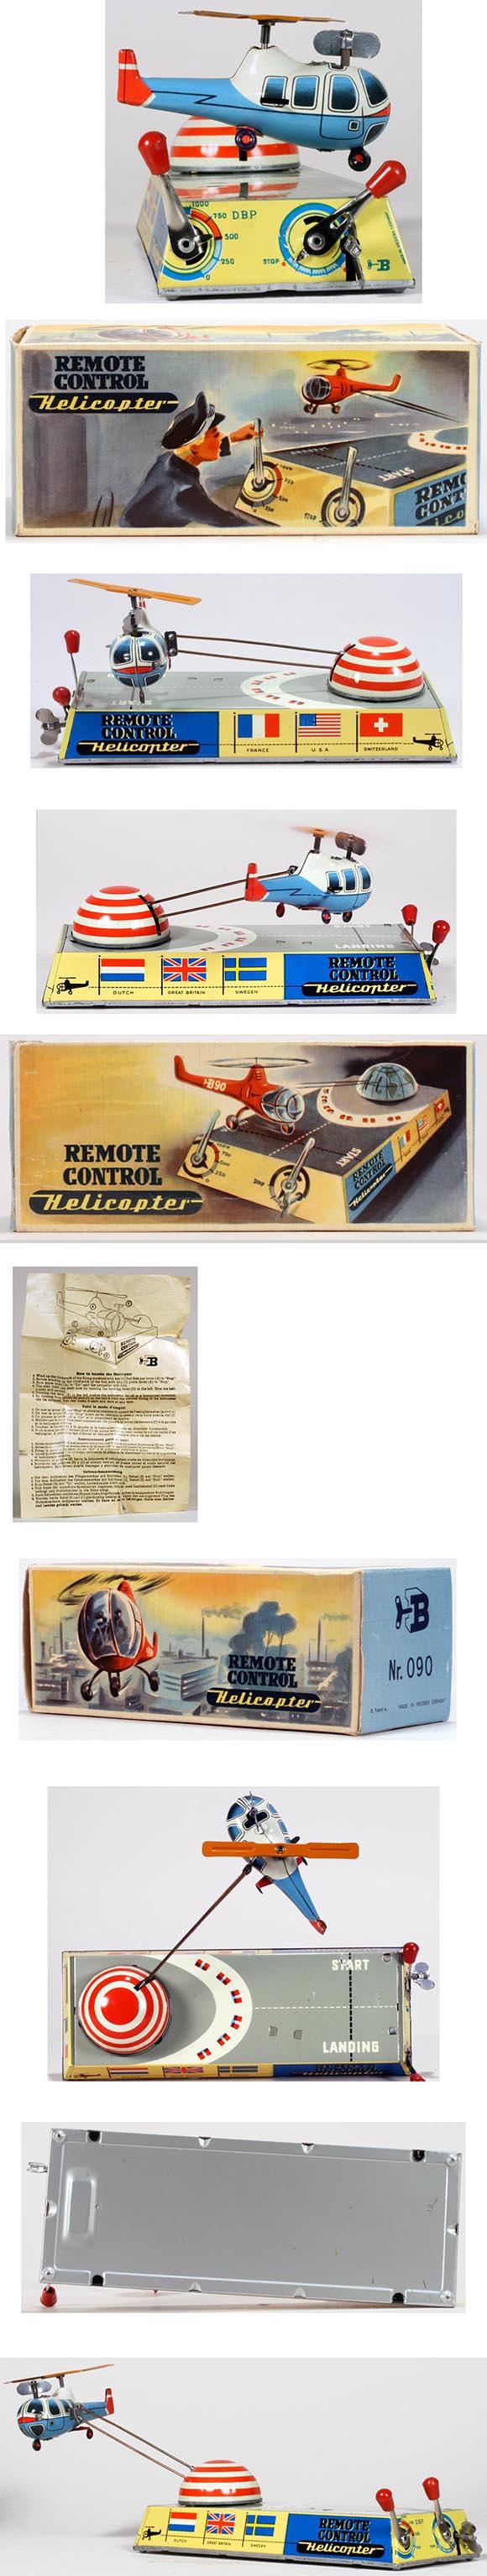 1957 Biller Nr.90 Remote Control Helicopter in Original Box